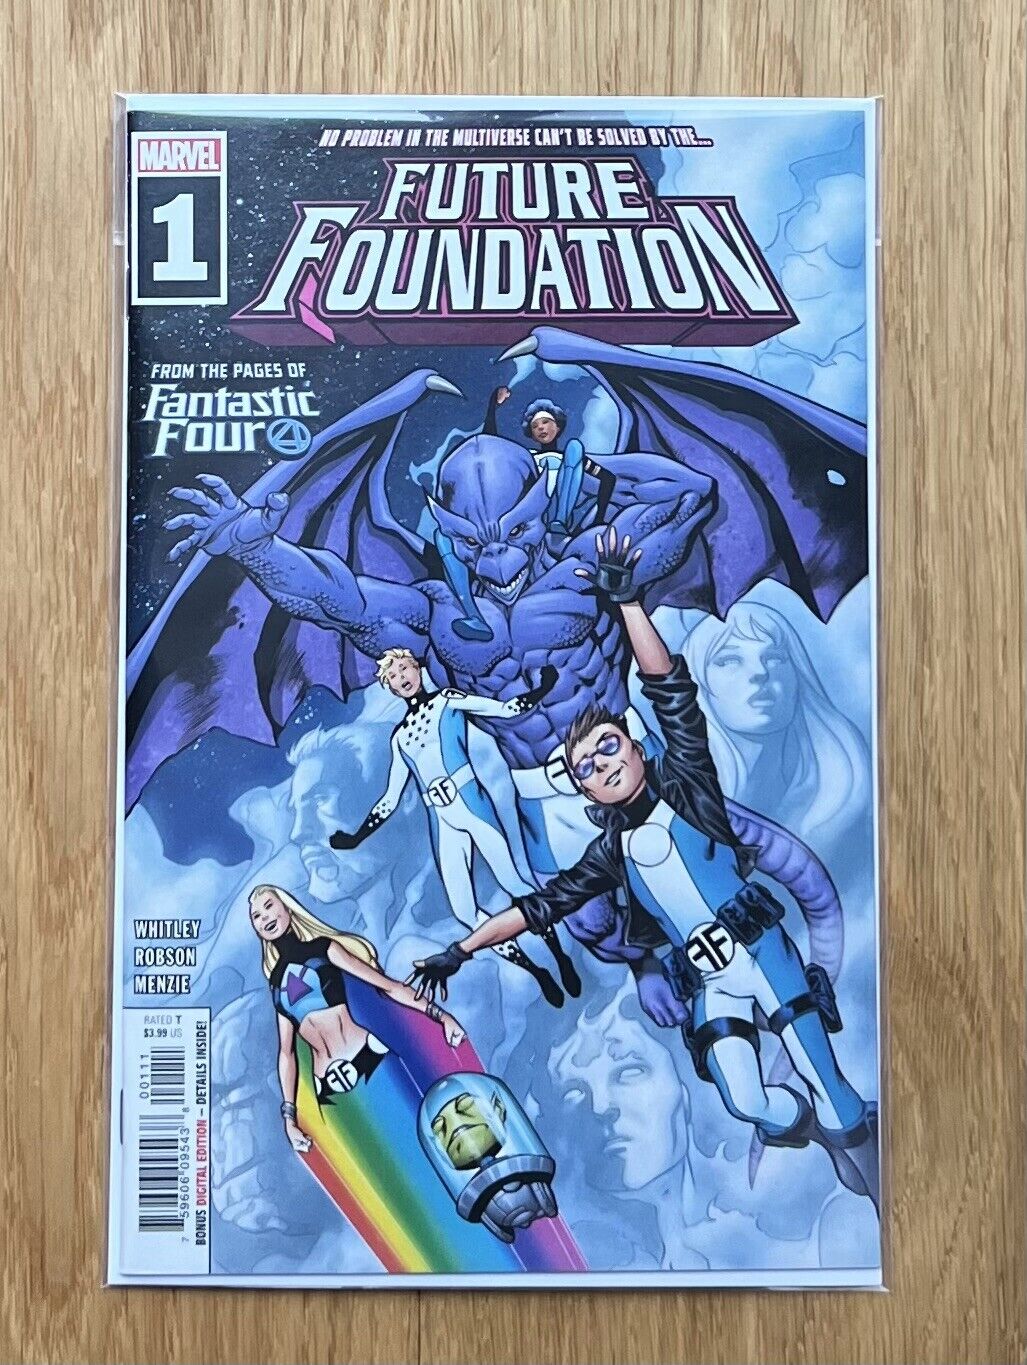 Marvel Comics - Future Foundation #1 - Oct 2019